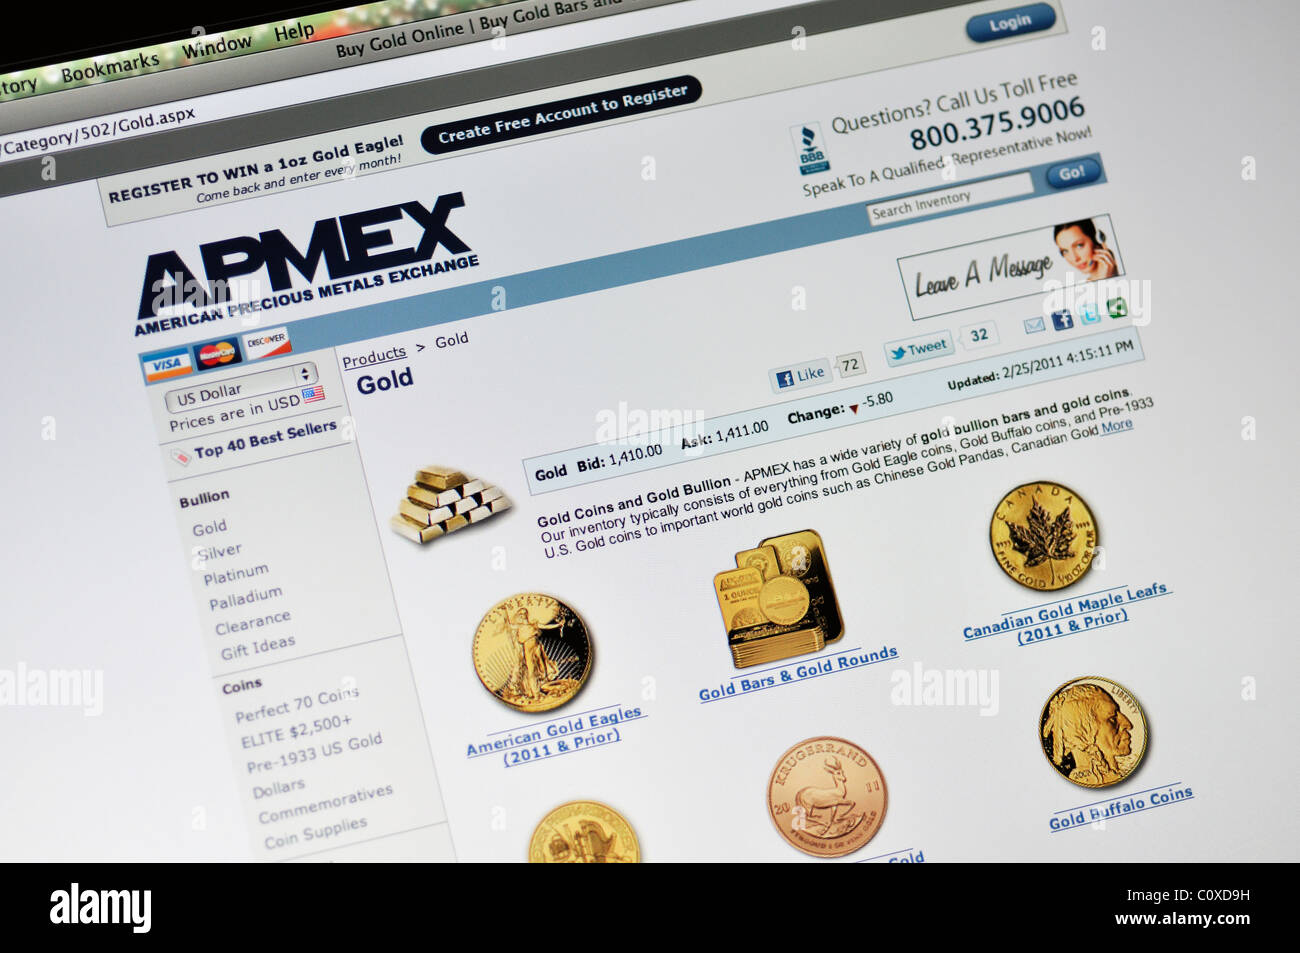 APMEX website - American Precious Metals Exchange Foto de stock